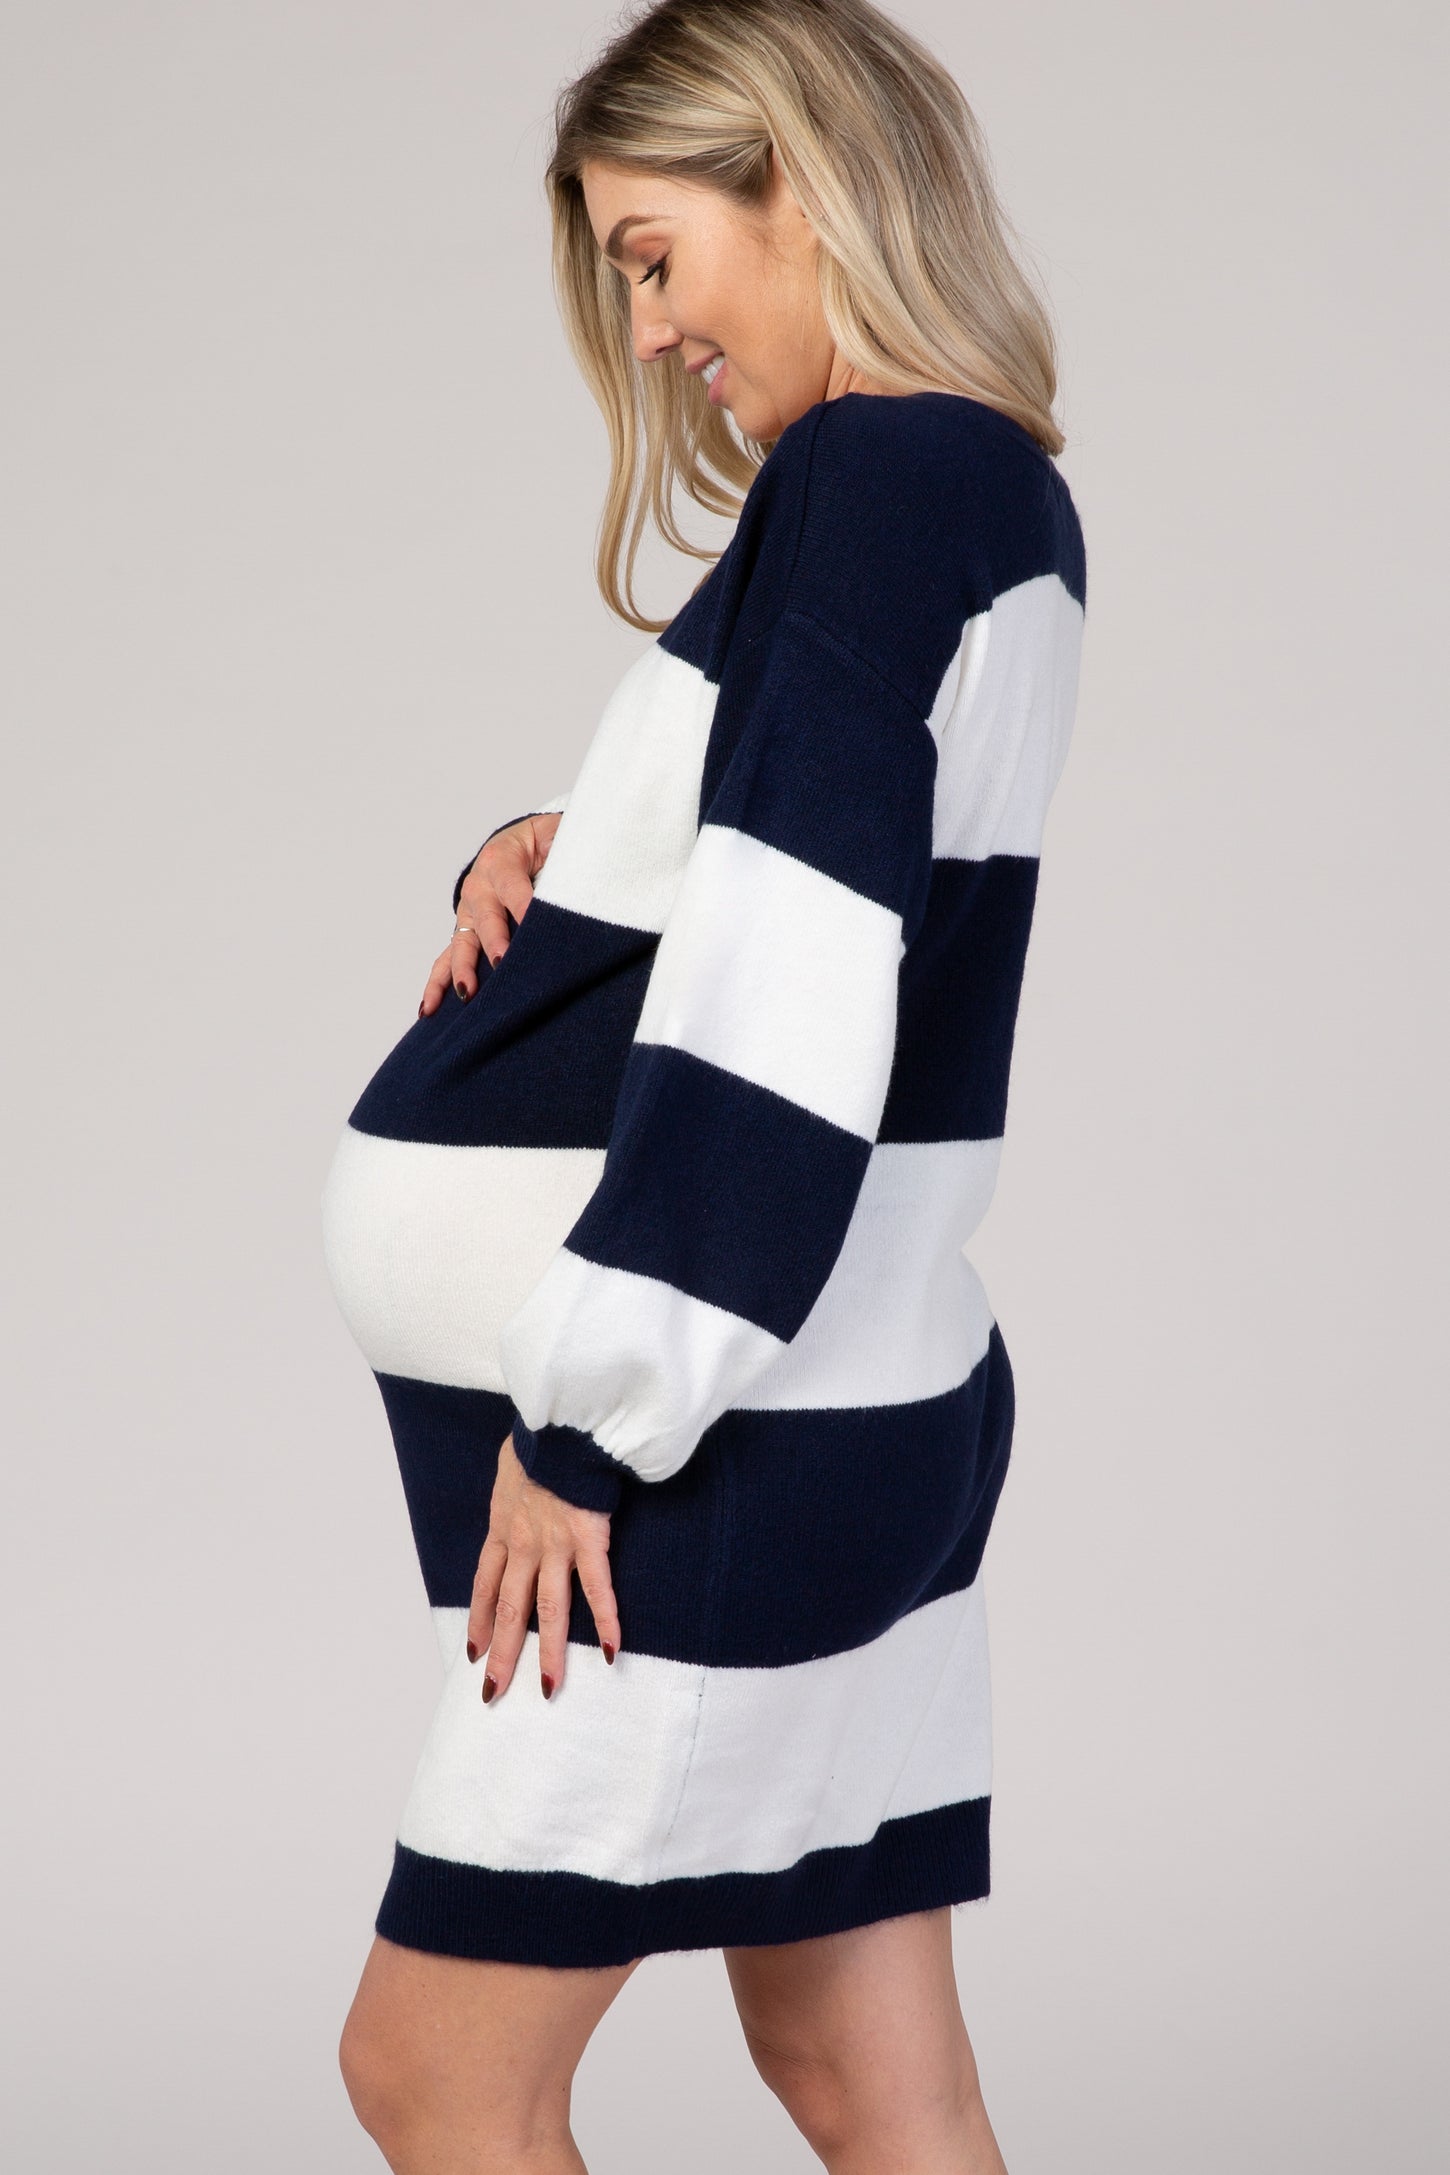 Navy Blue Large Striped Long Bubble Sleeve Knit Maternity Sweater Dress